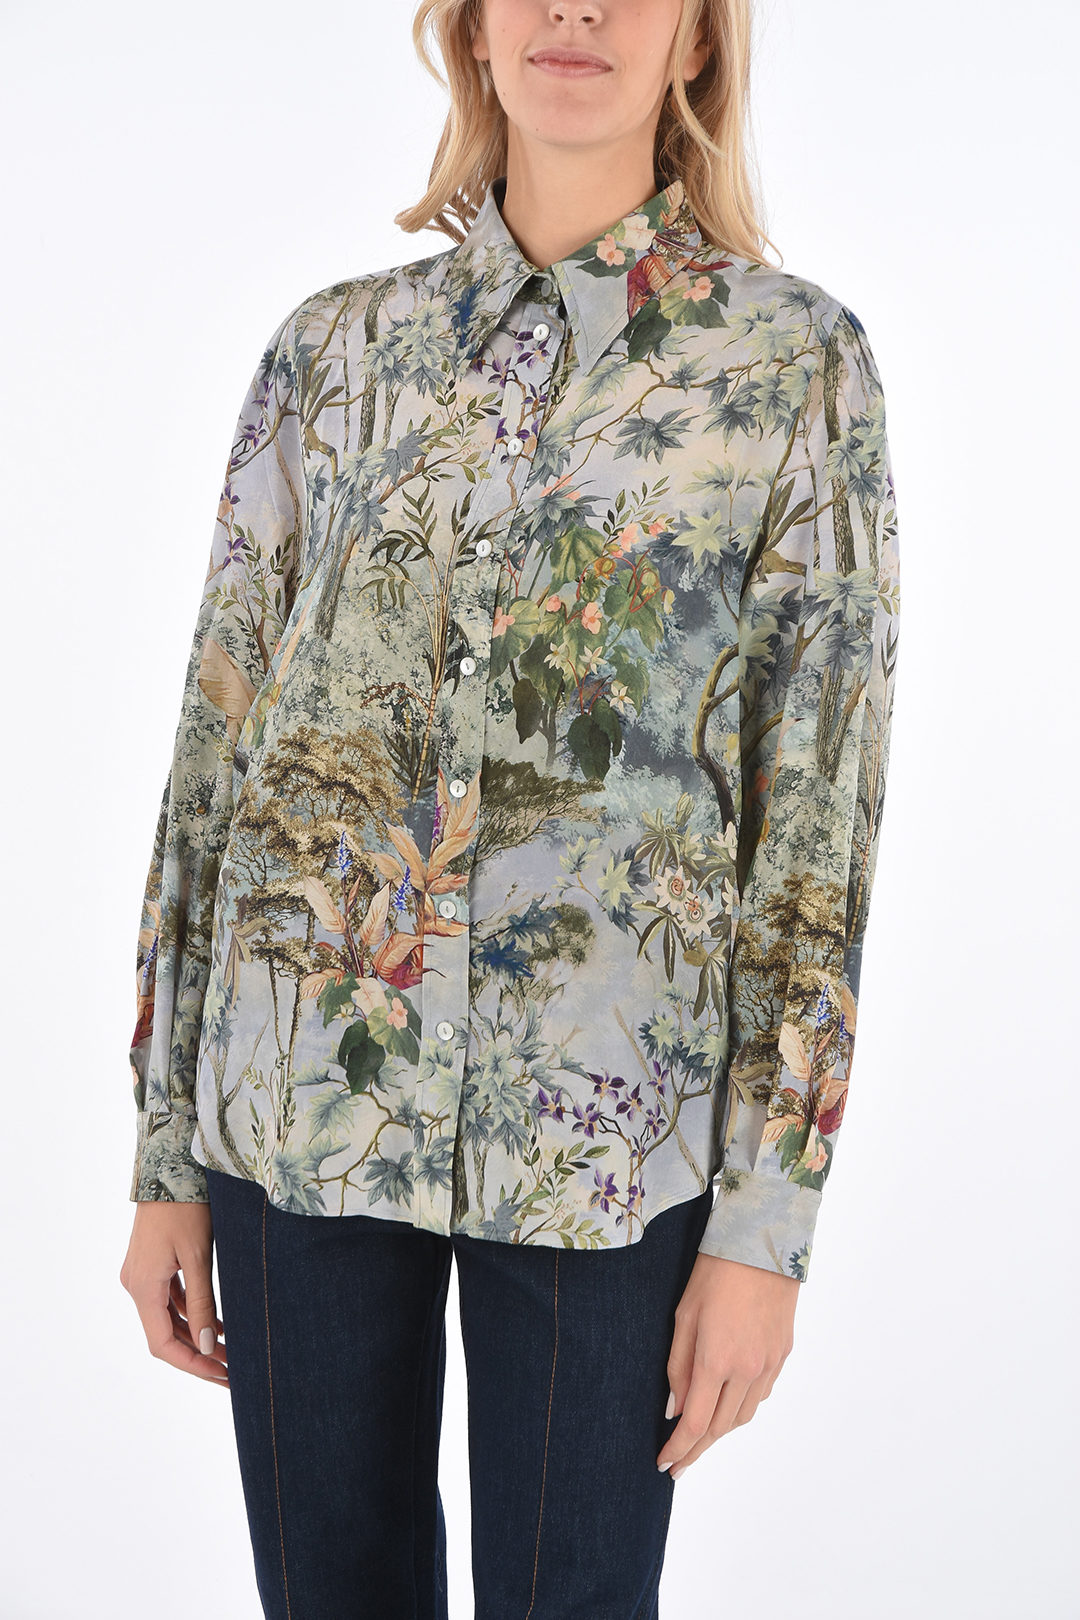 Alberta Ferretti floral-print silk shirt women - Glamood Outlet